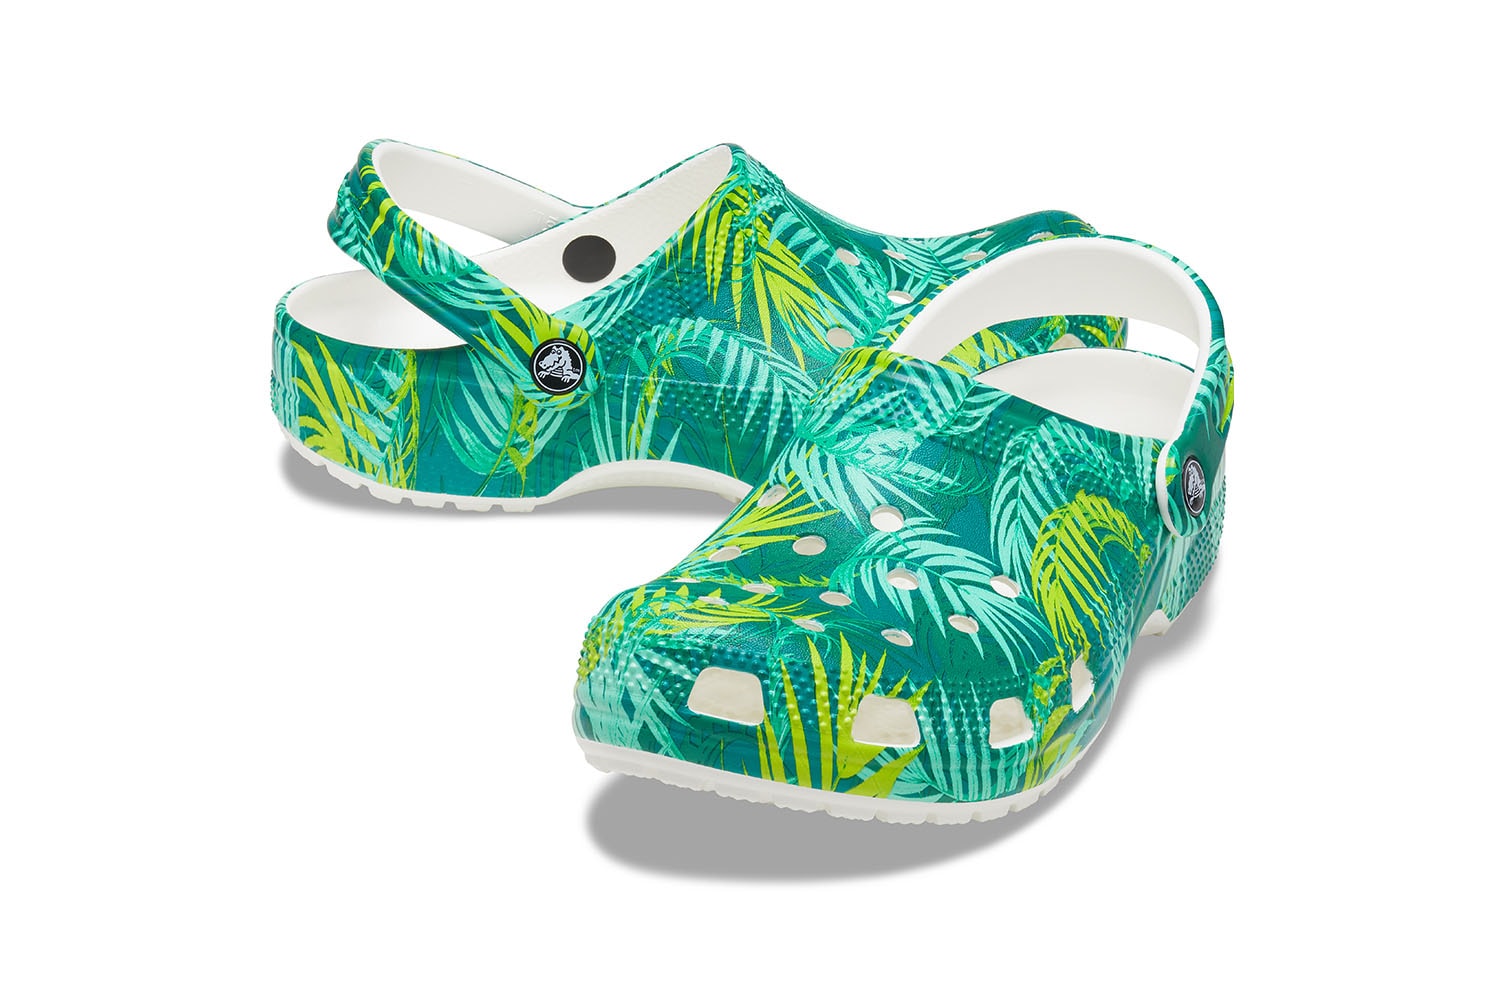 Crocs Release Tropical Collection Summer 2021 Clogs Sandals